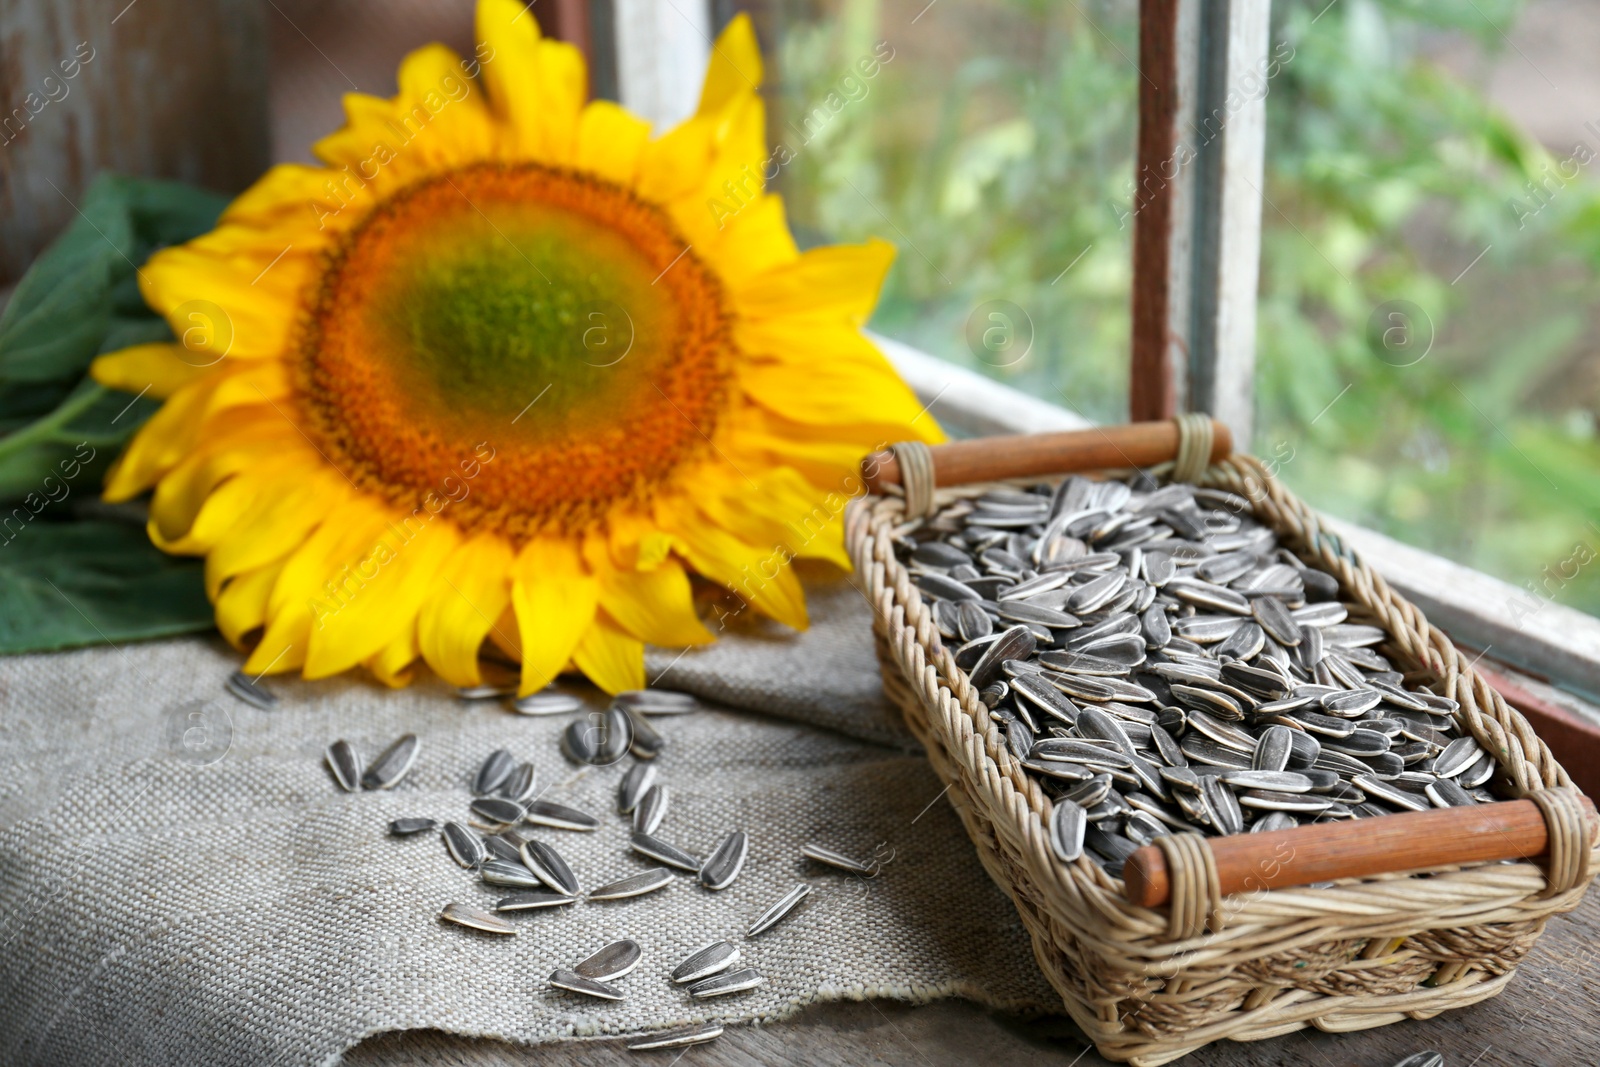 Photo of Organic sunflower seeds and flower on cloth near window